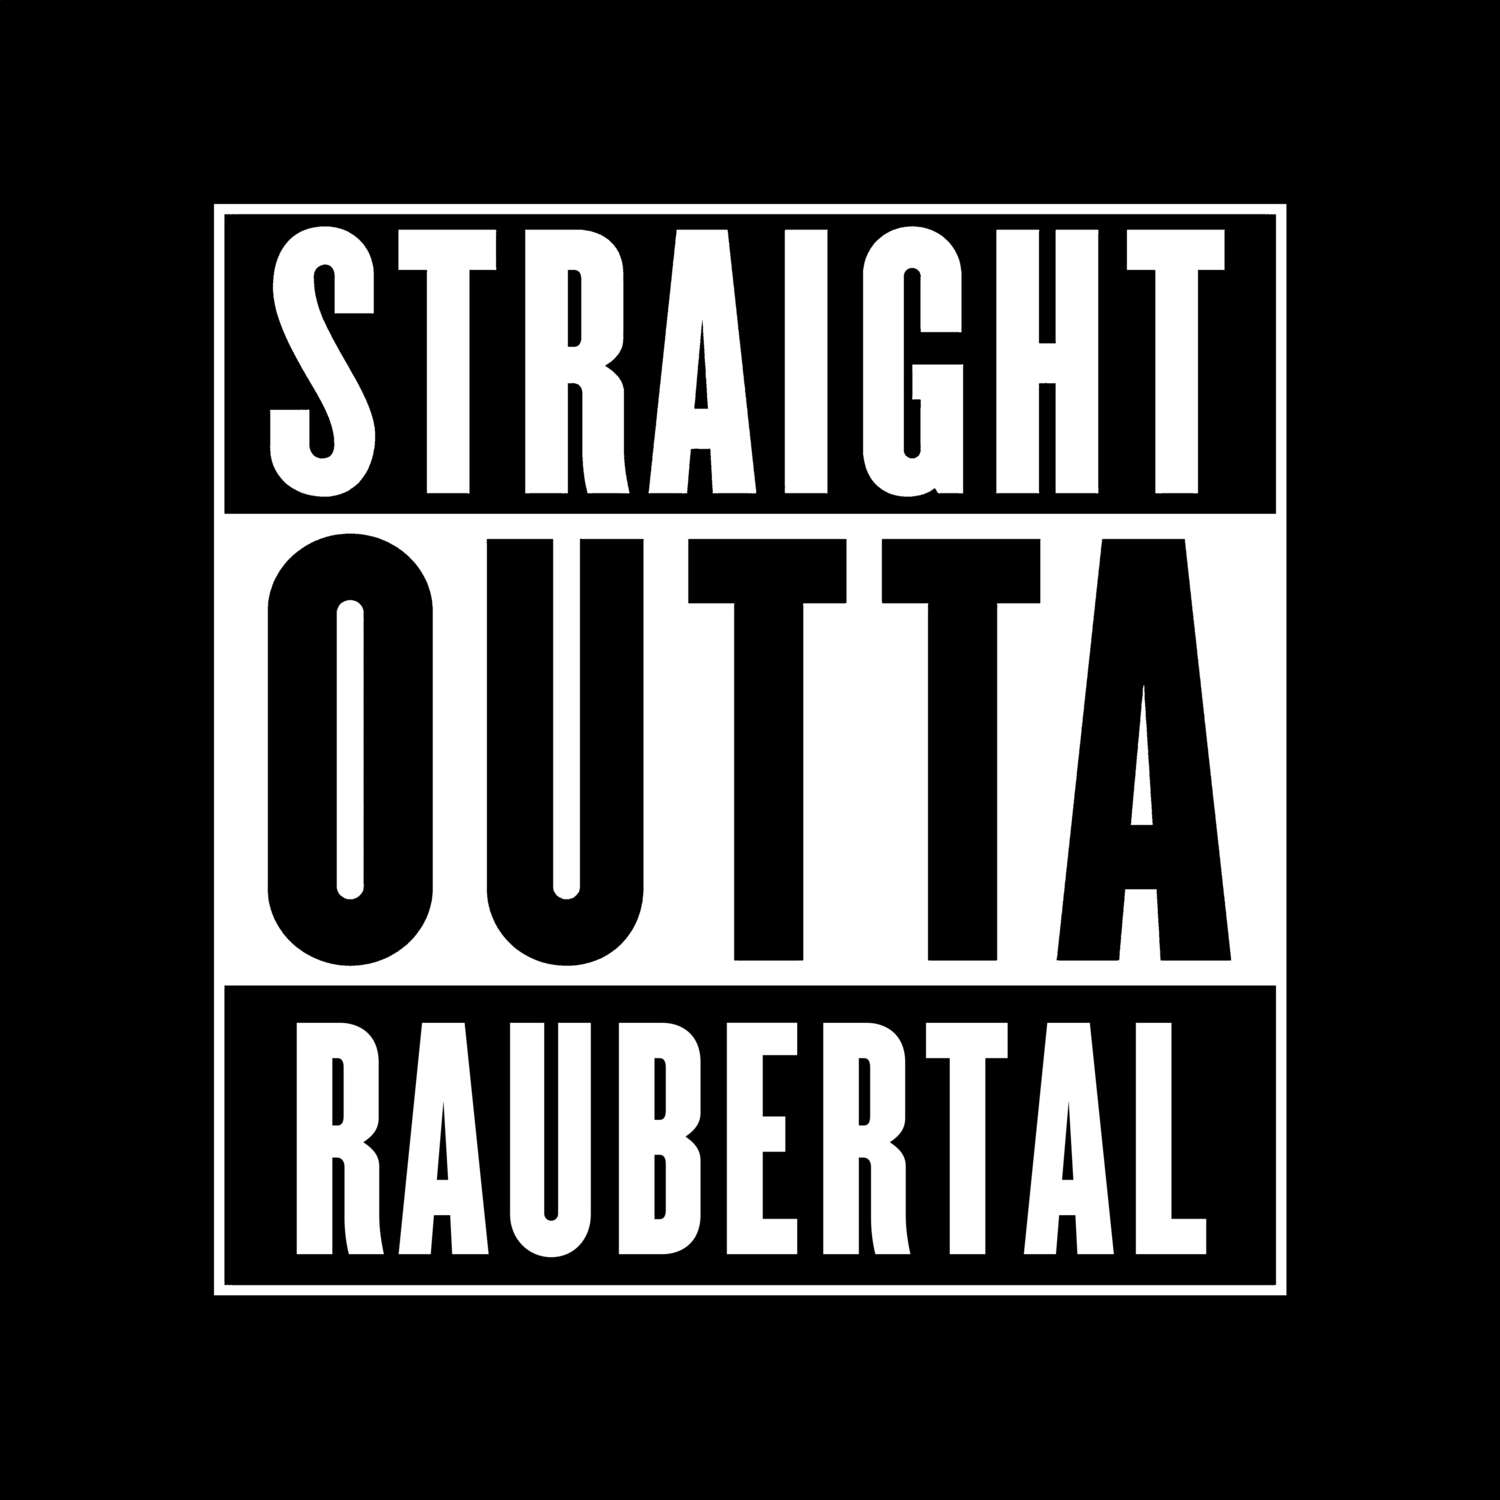 Raubertal T-Shirt »Straight Outta«